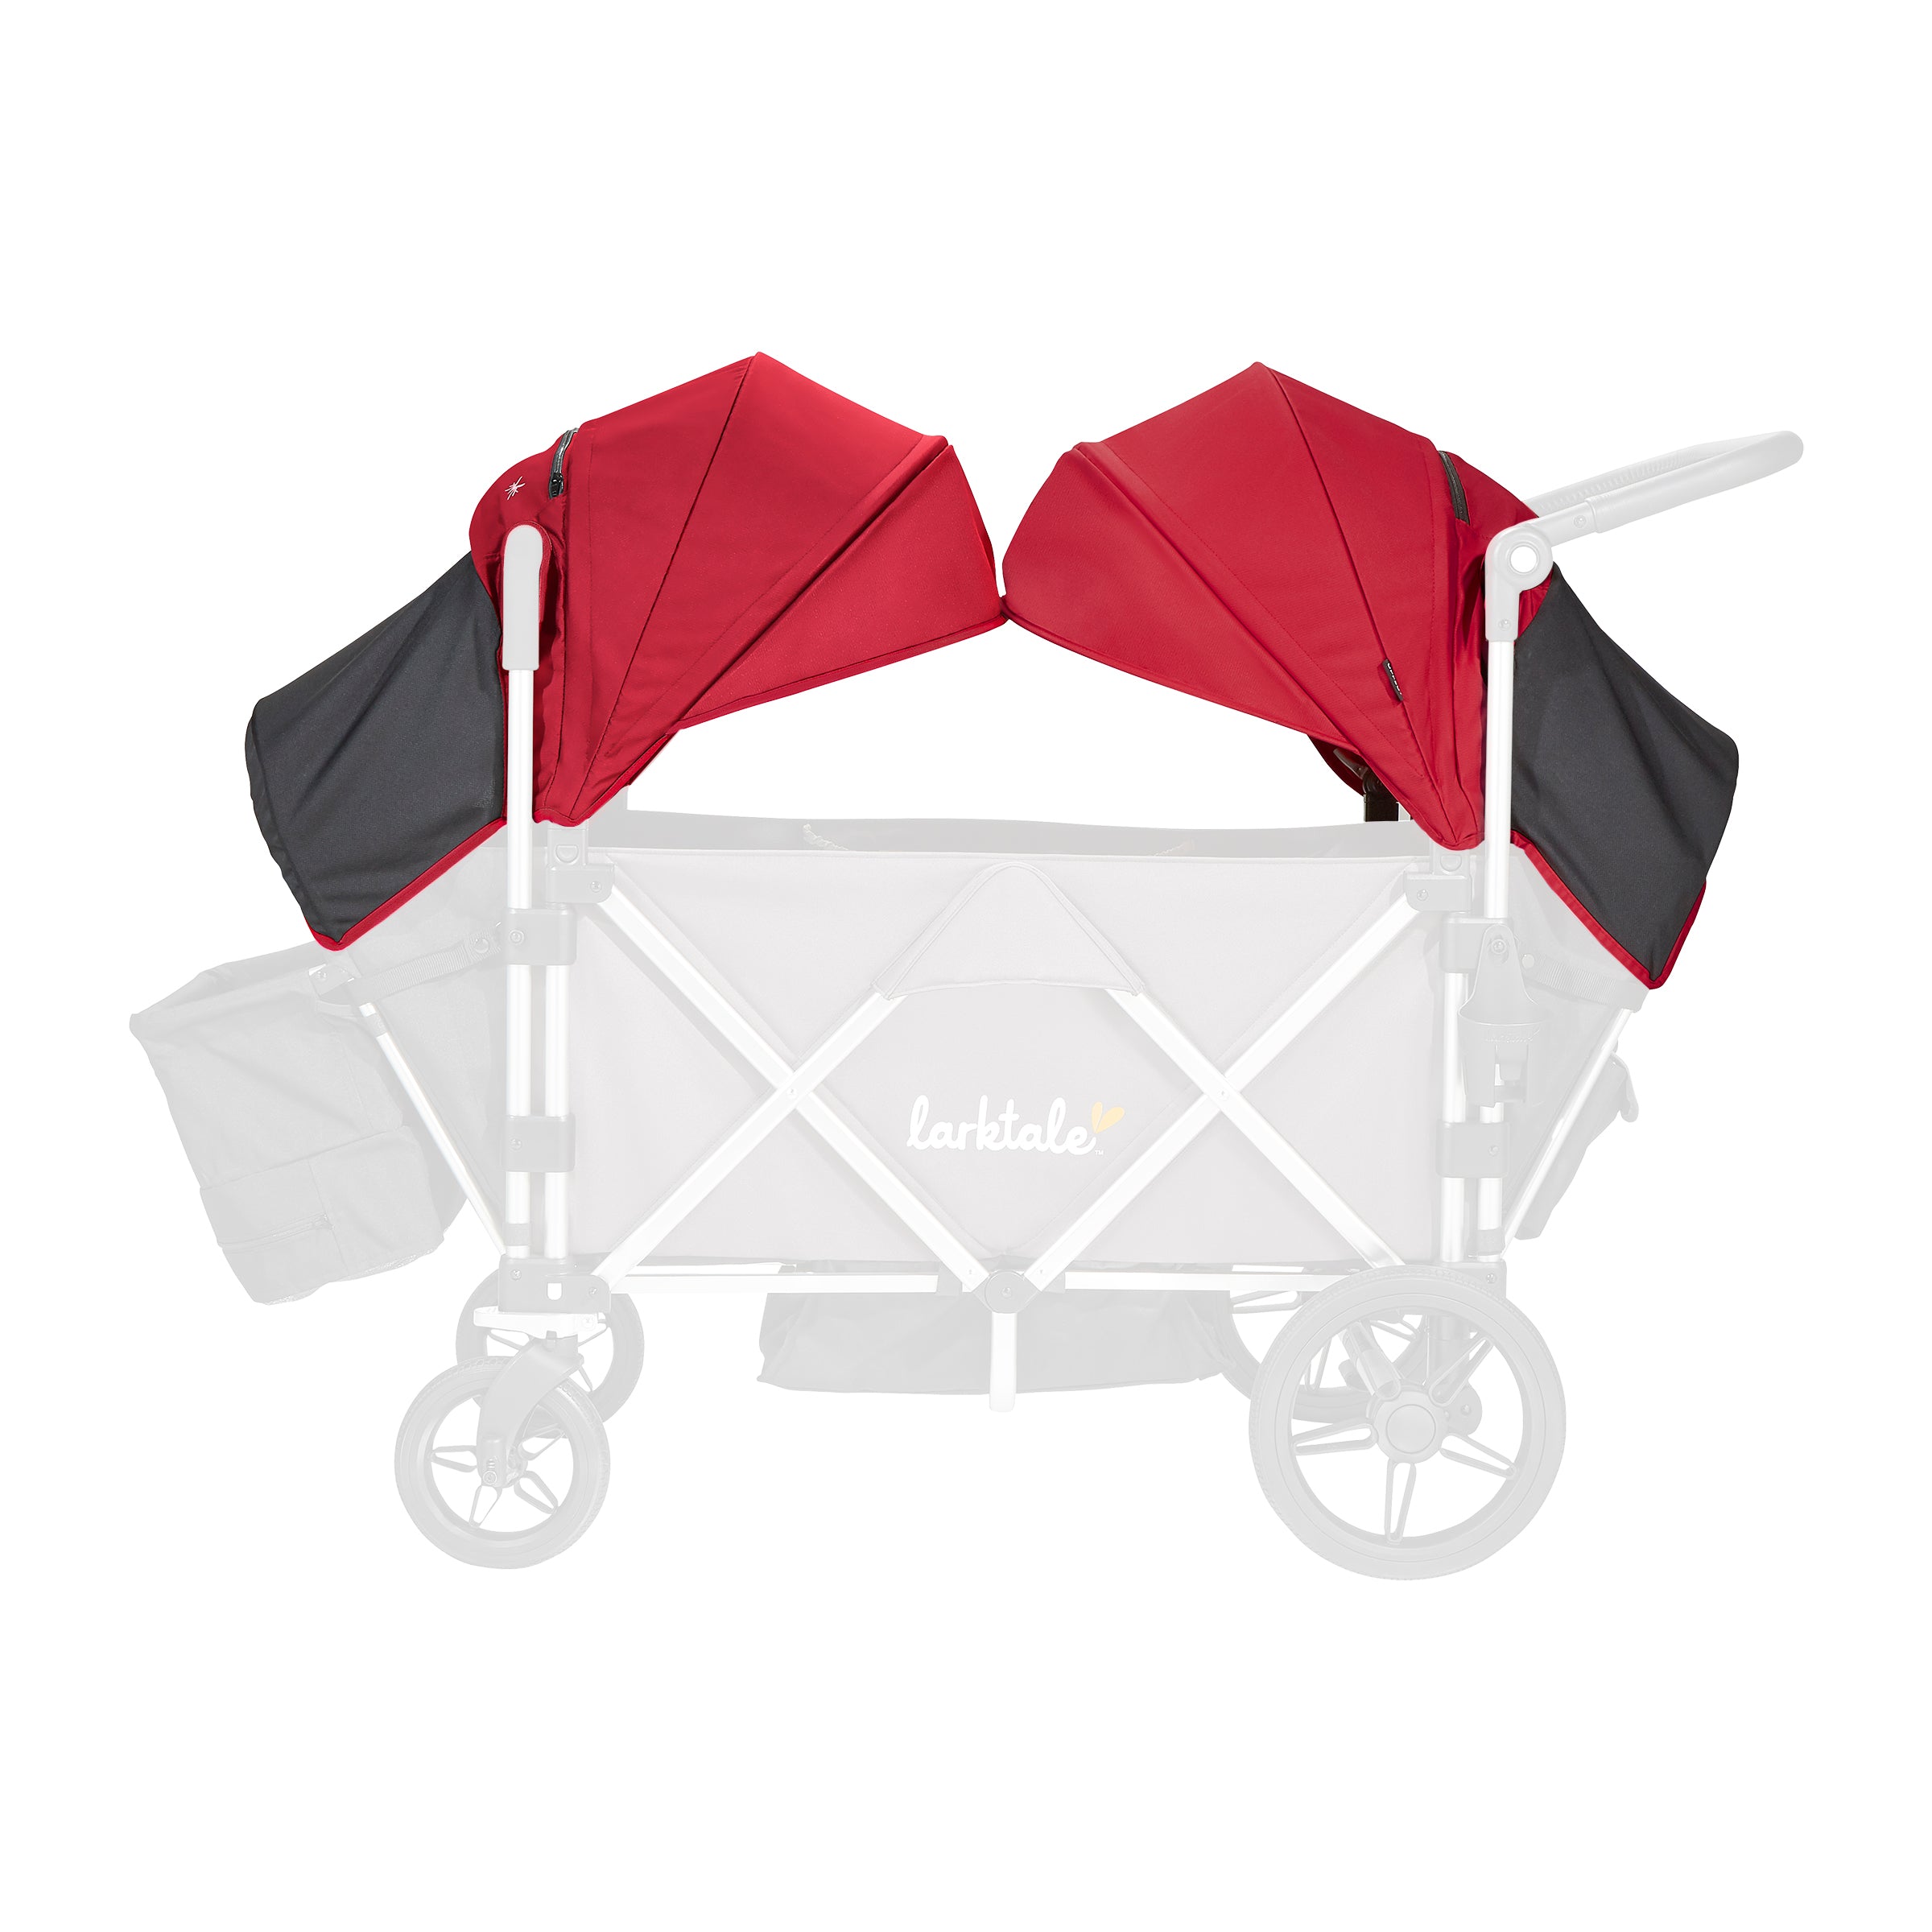 Caravan stroller/wagon sun canopy set - seat recline of stroller/wagon